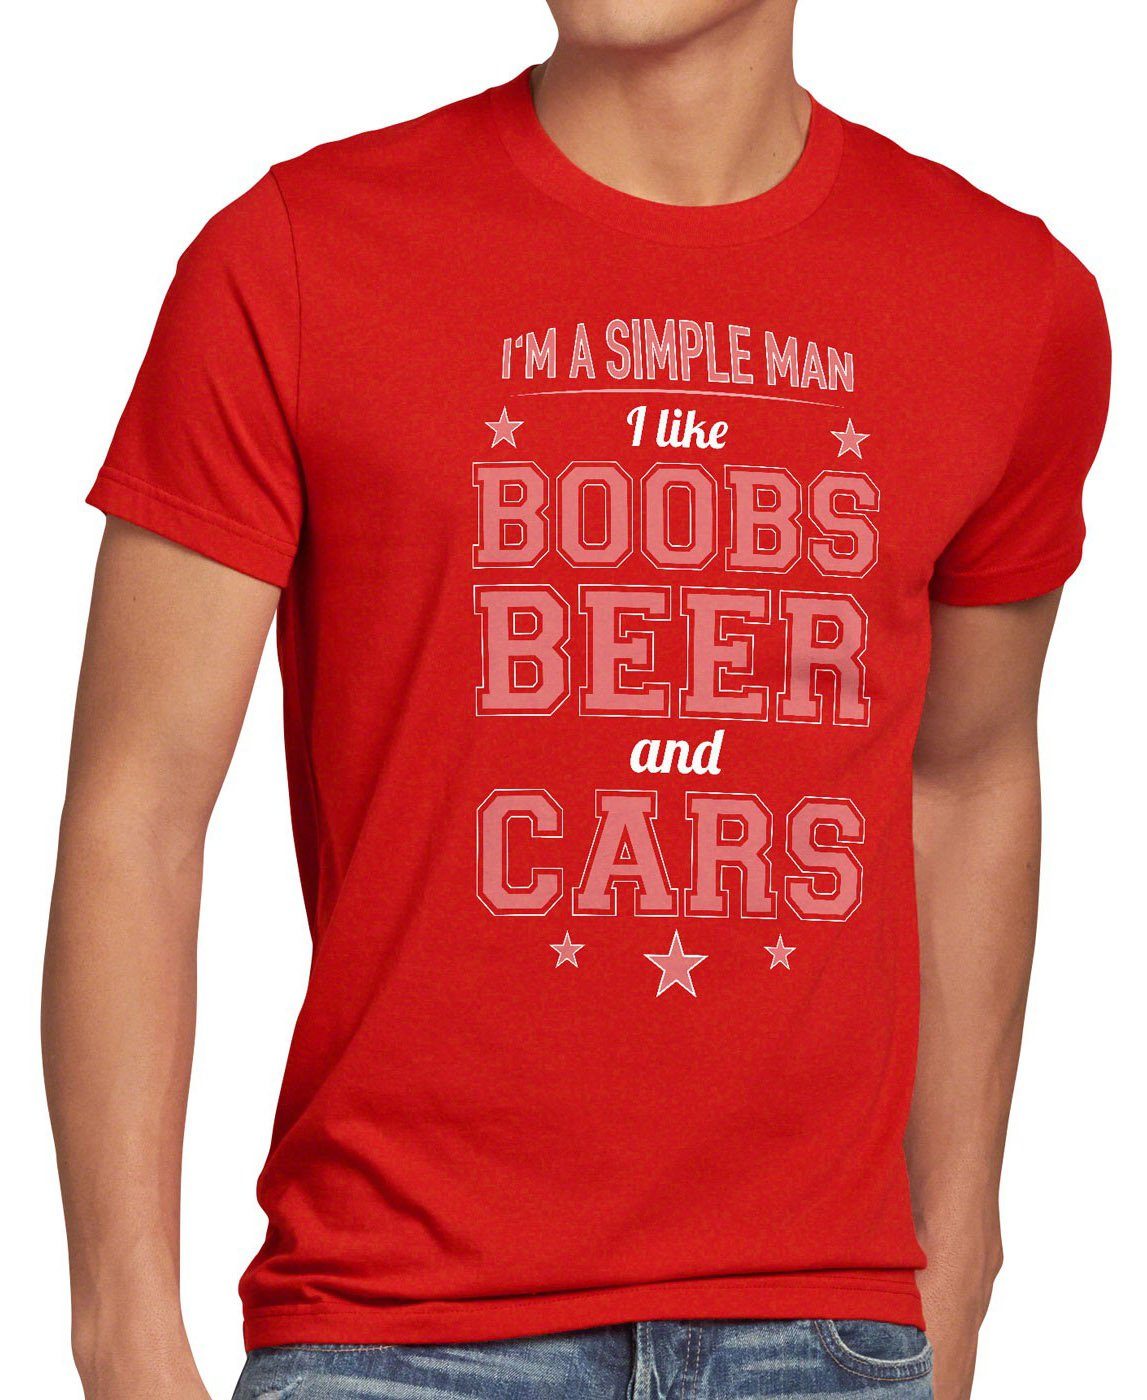 style3 Print-Shirt Herren T-Shirt Simple Man boobs beer car auto bier titten funshirt tuning spruch rot